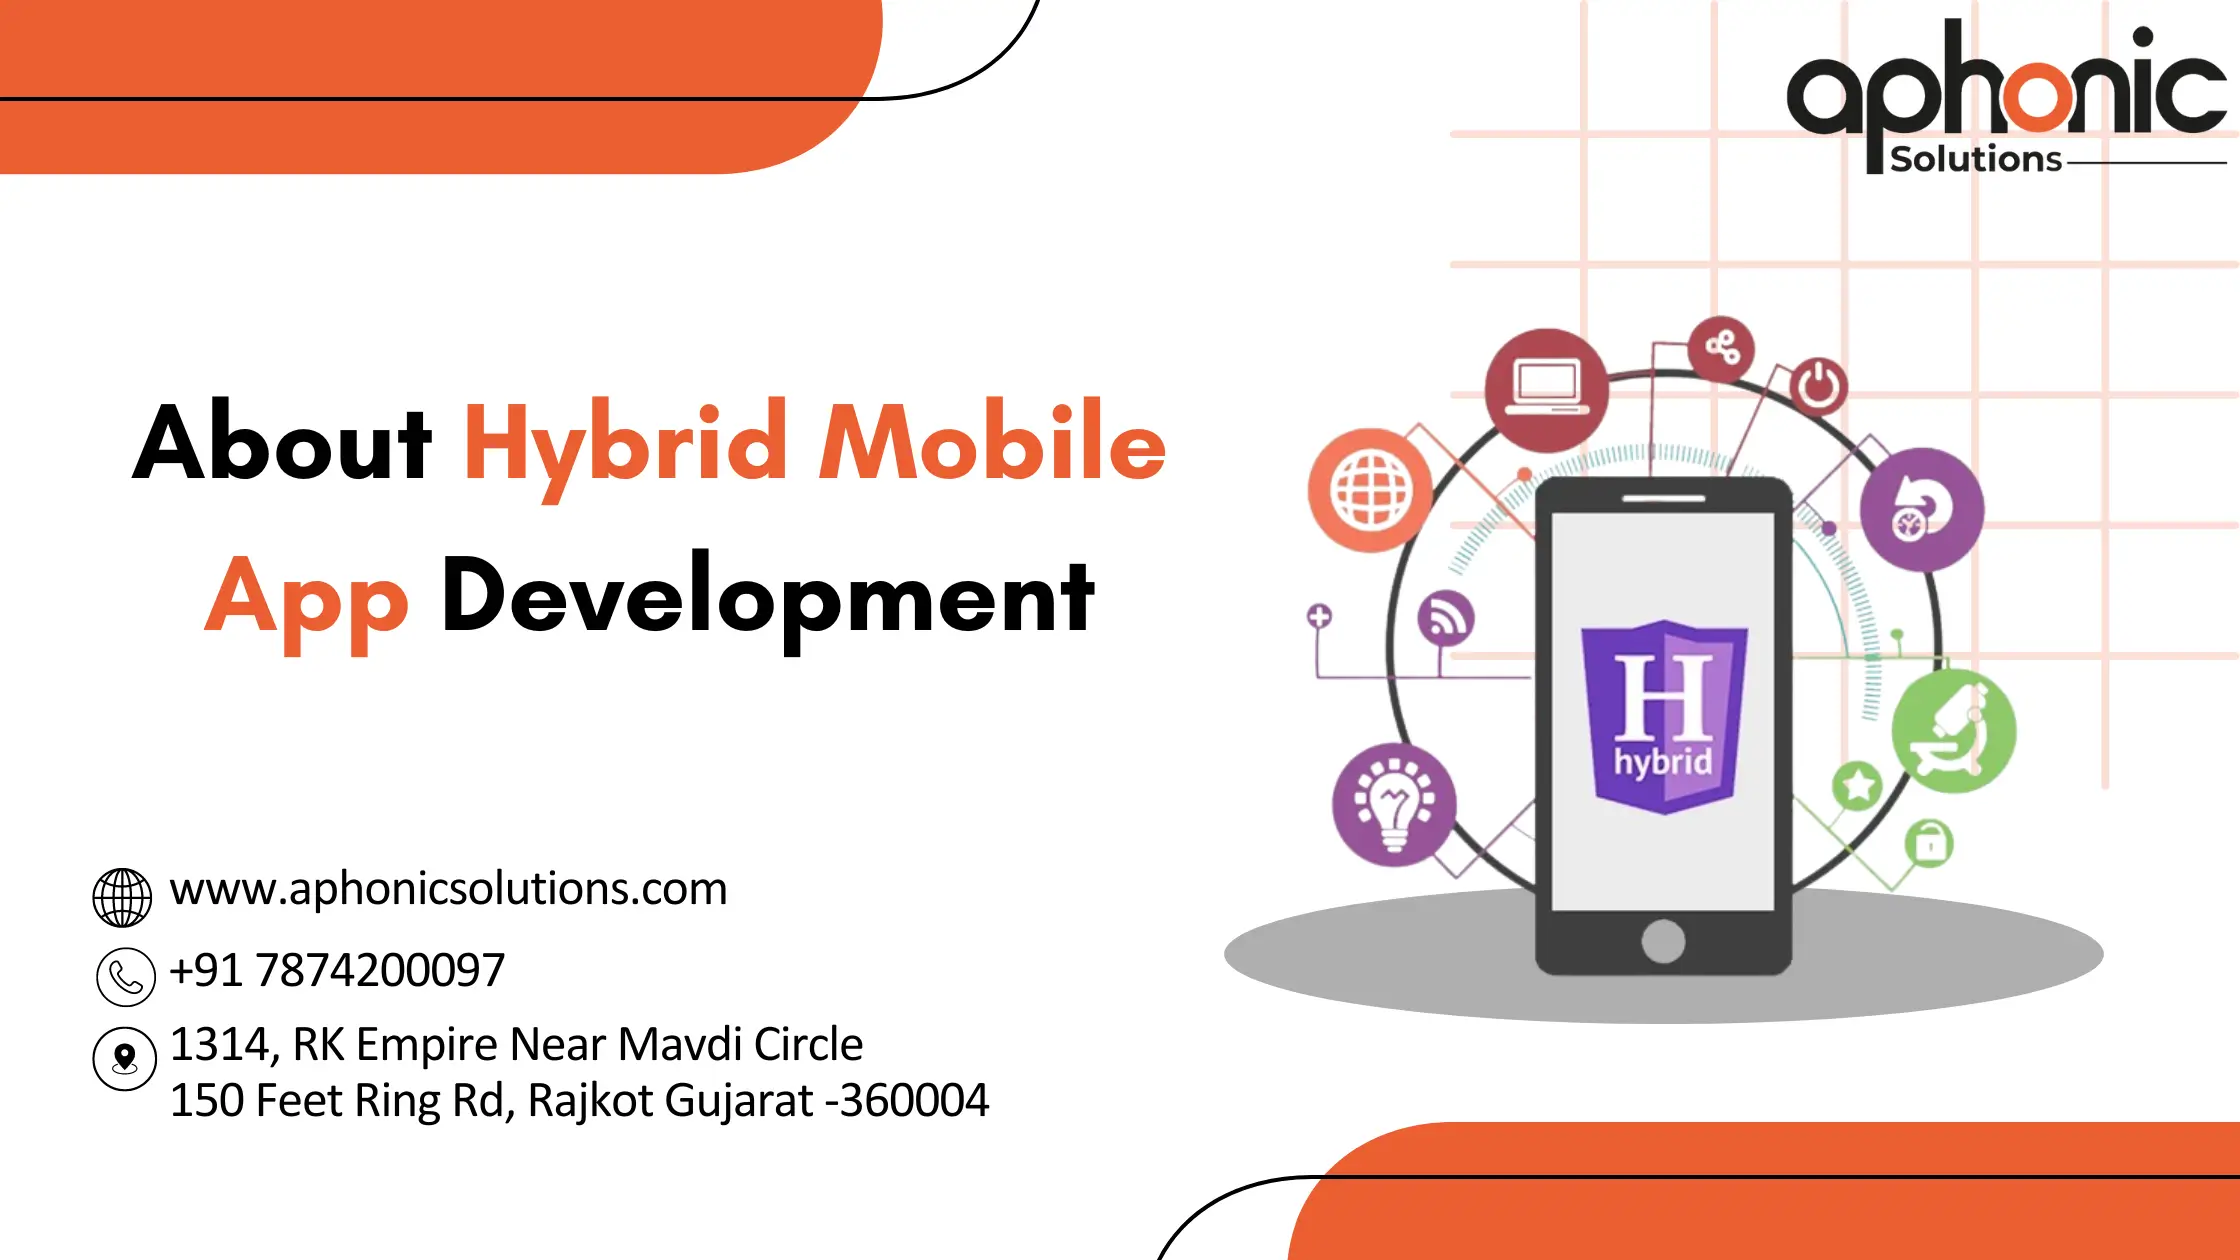 About Hybrid Mobile App Development